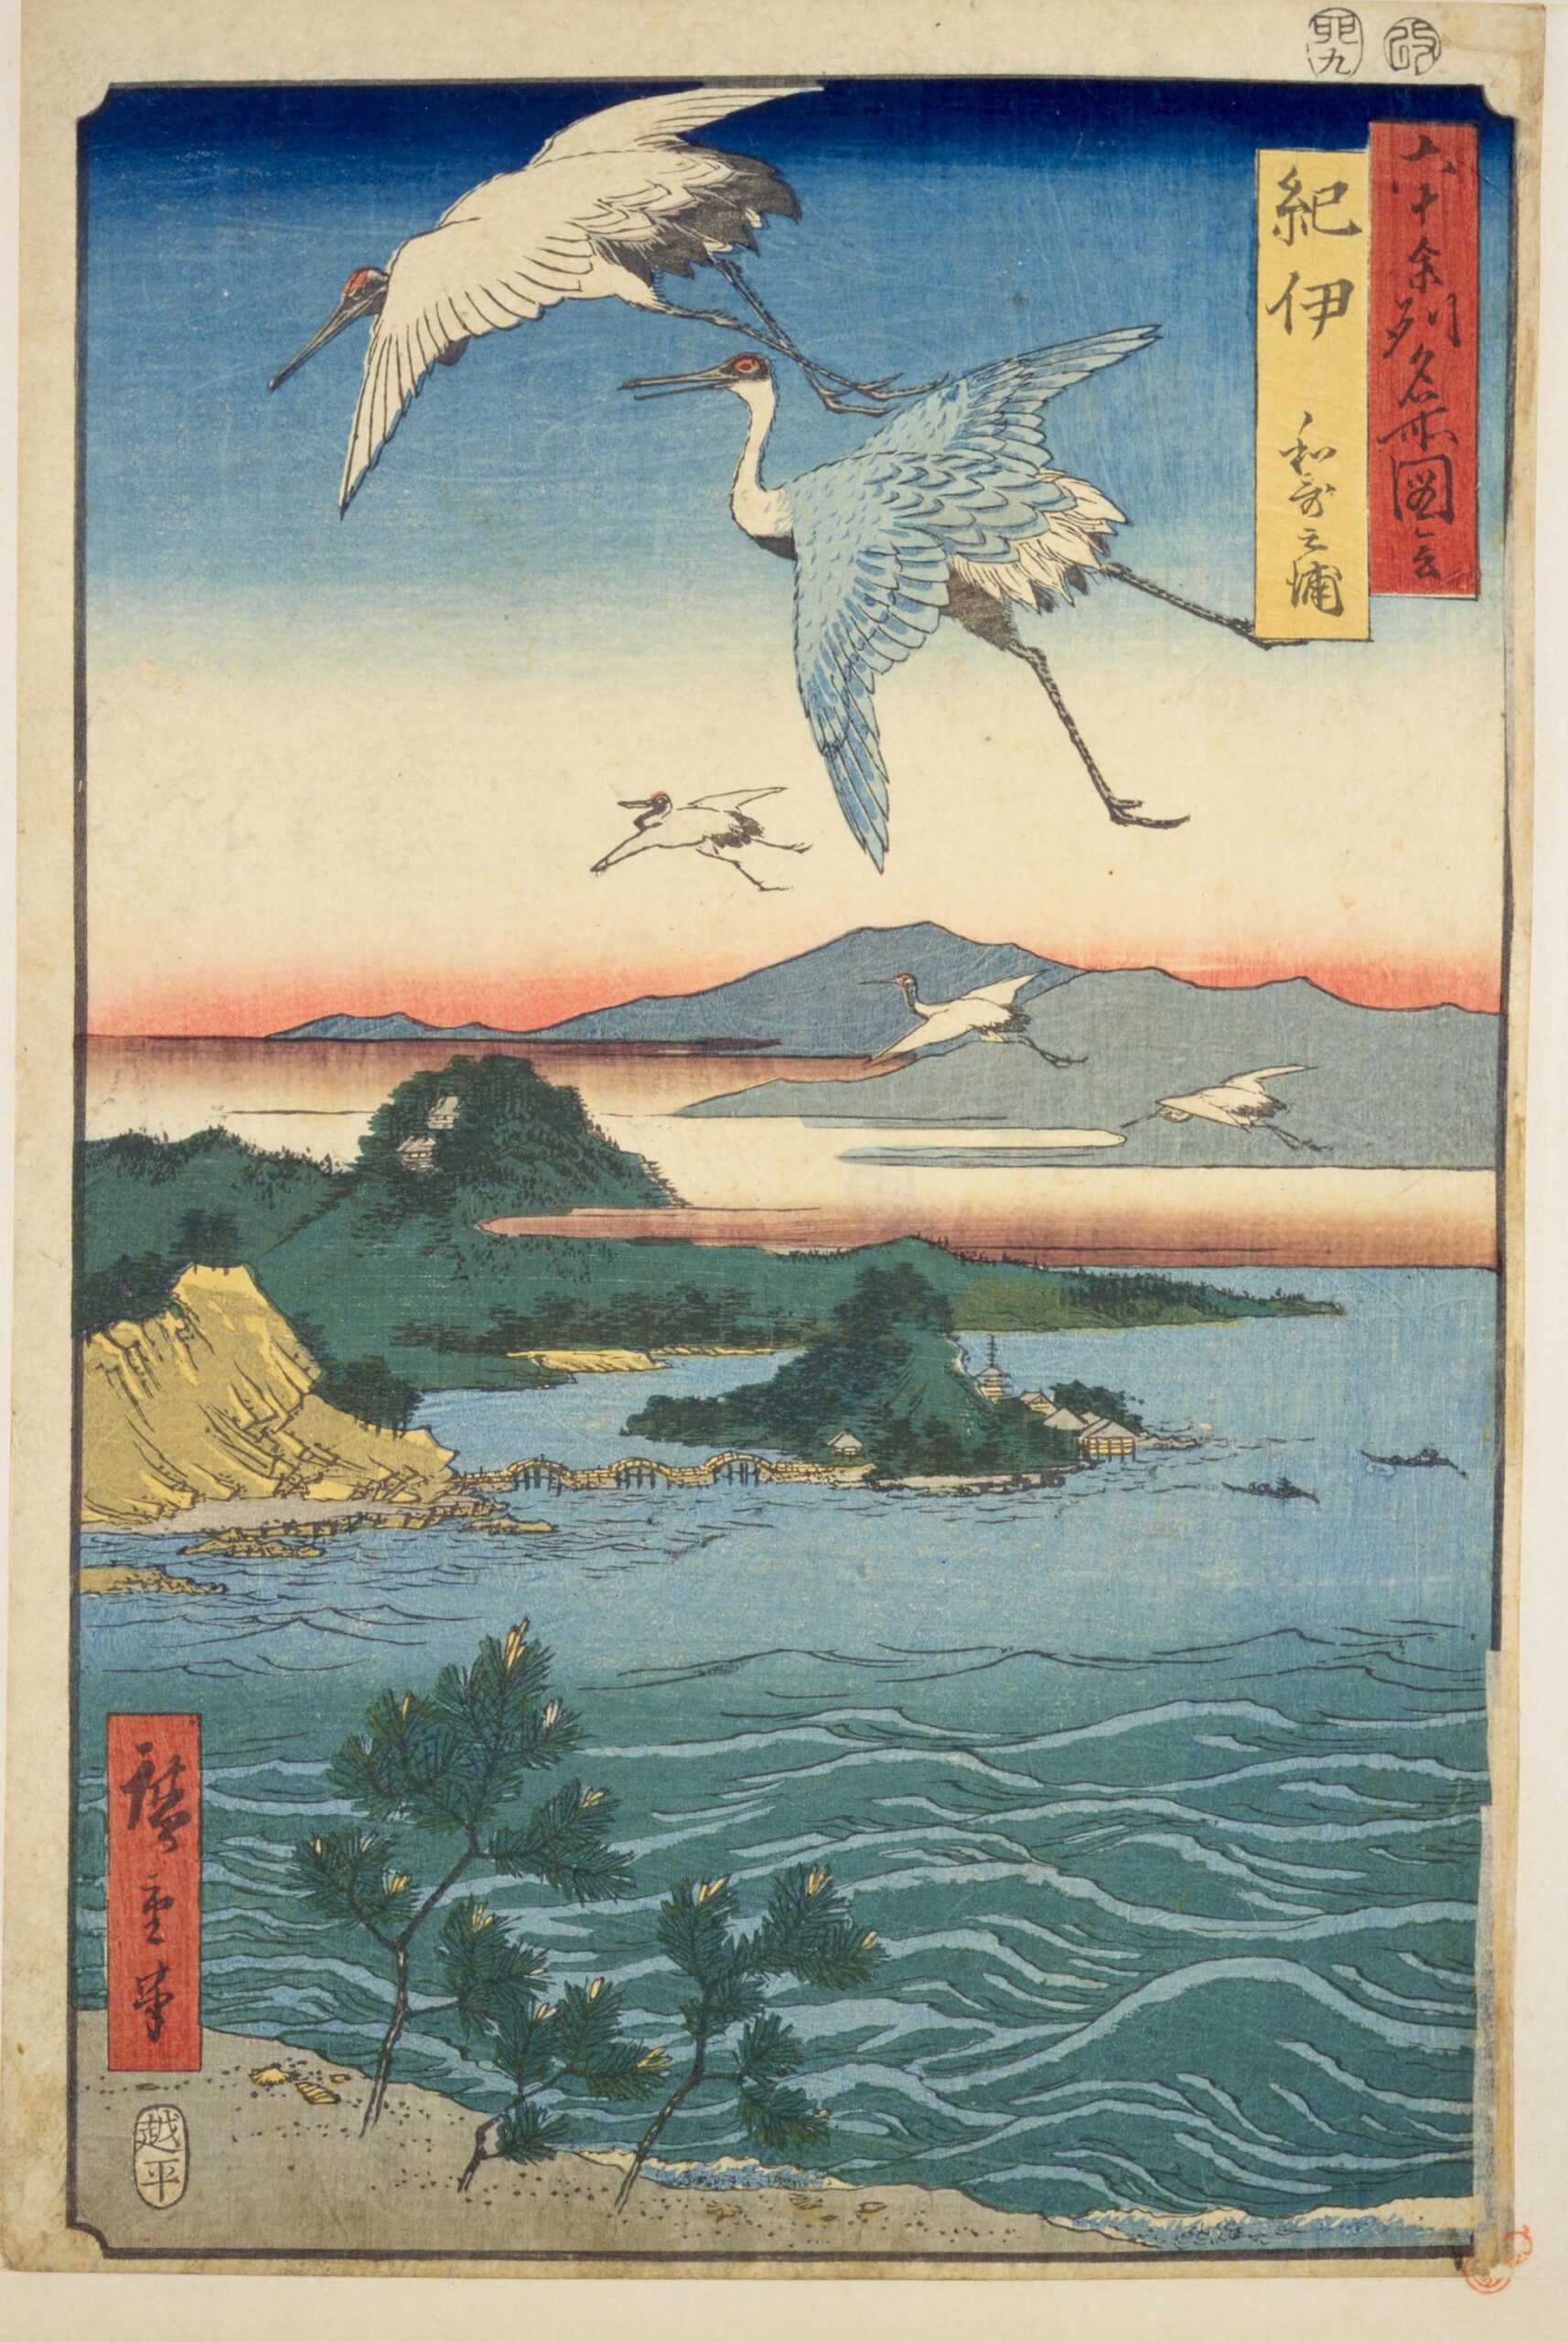 Hiroshiges - 53 Kii Province: Waka-no-ura Bay (Kii, Waka-no-ura) - Pictures of Famous Places in the Sixty-odd Provinces